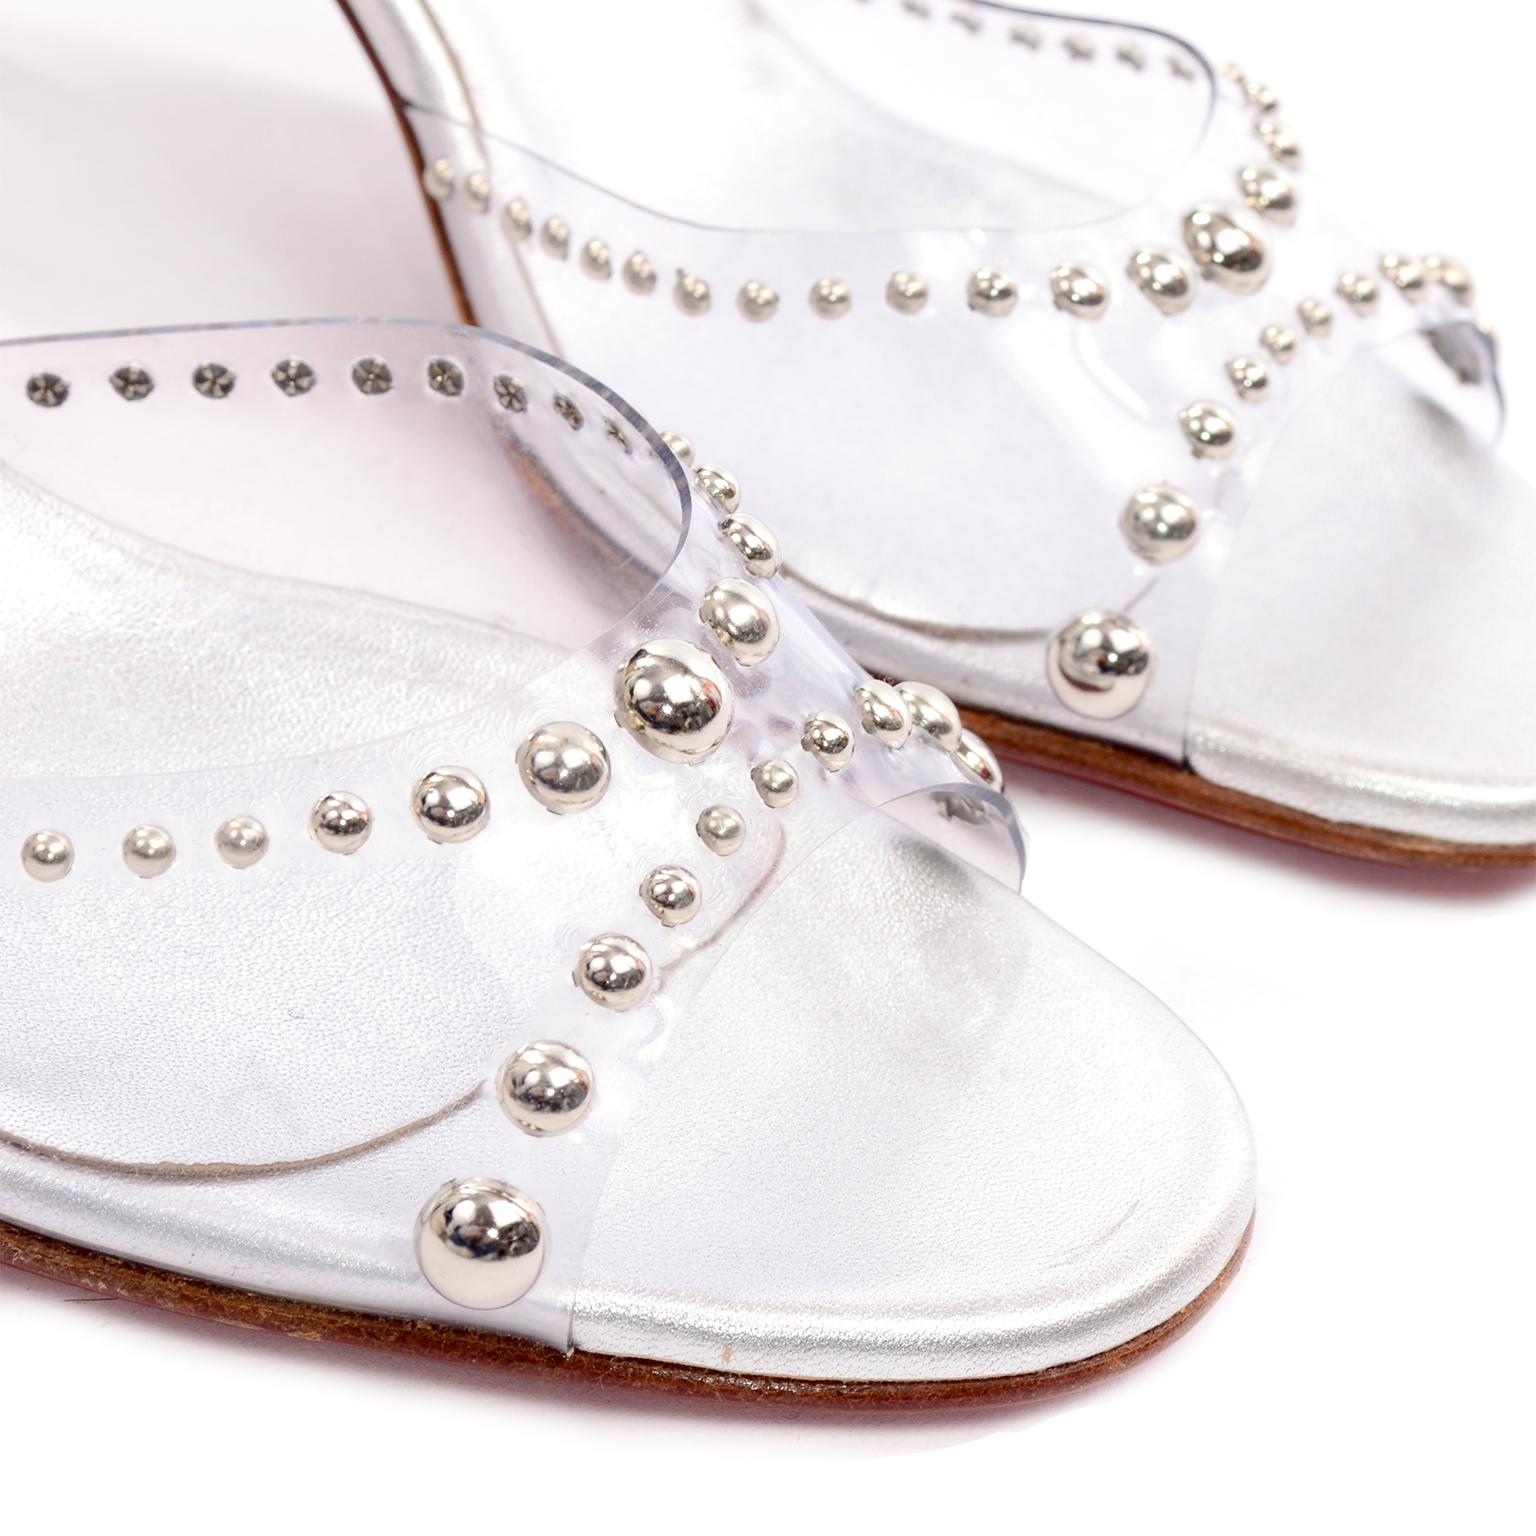 Women's Never Worn Christian Louboutin Shoes Clear Open Toe Slides w Silver Studs Sz 39